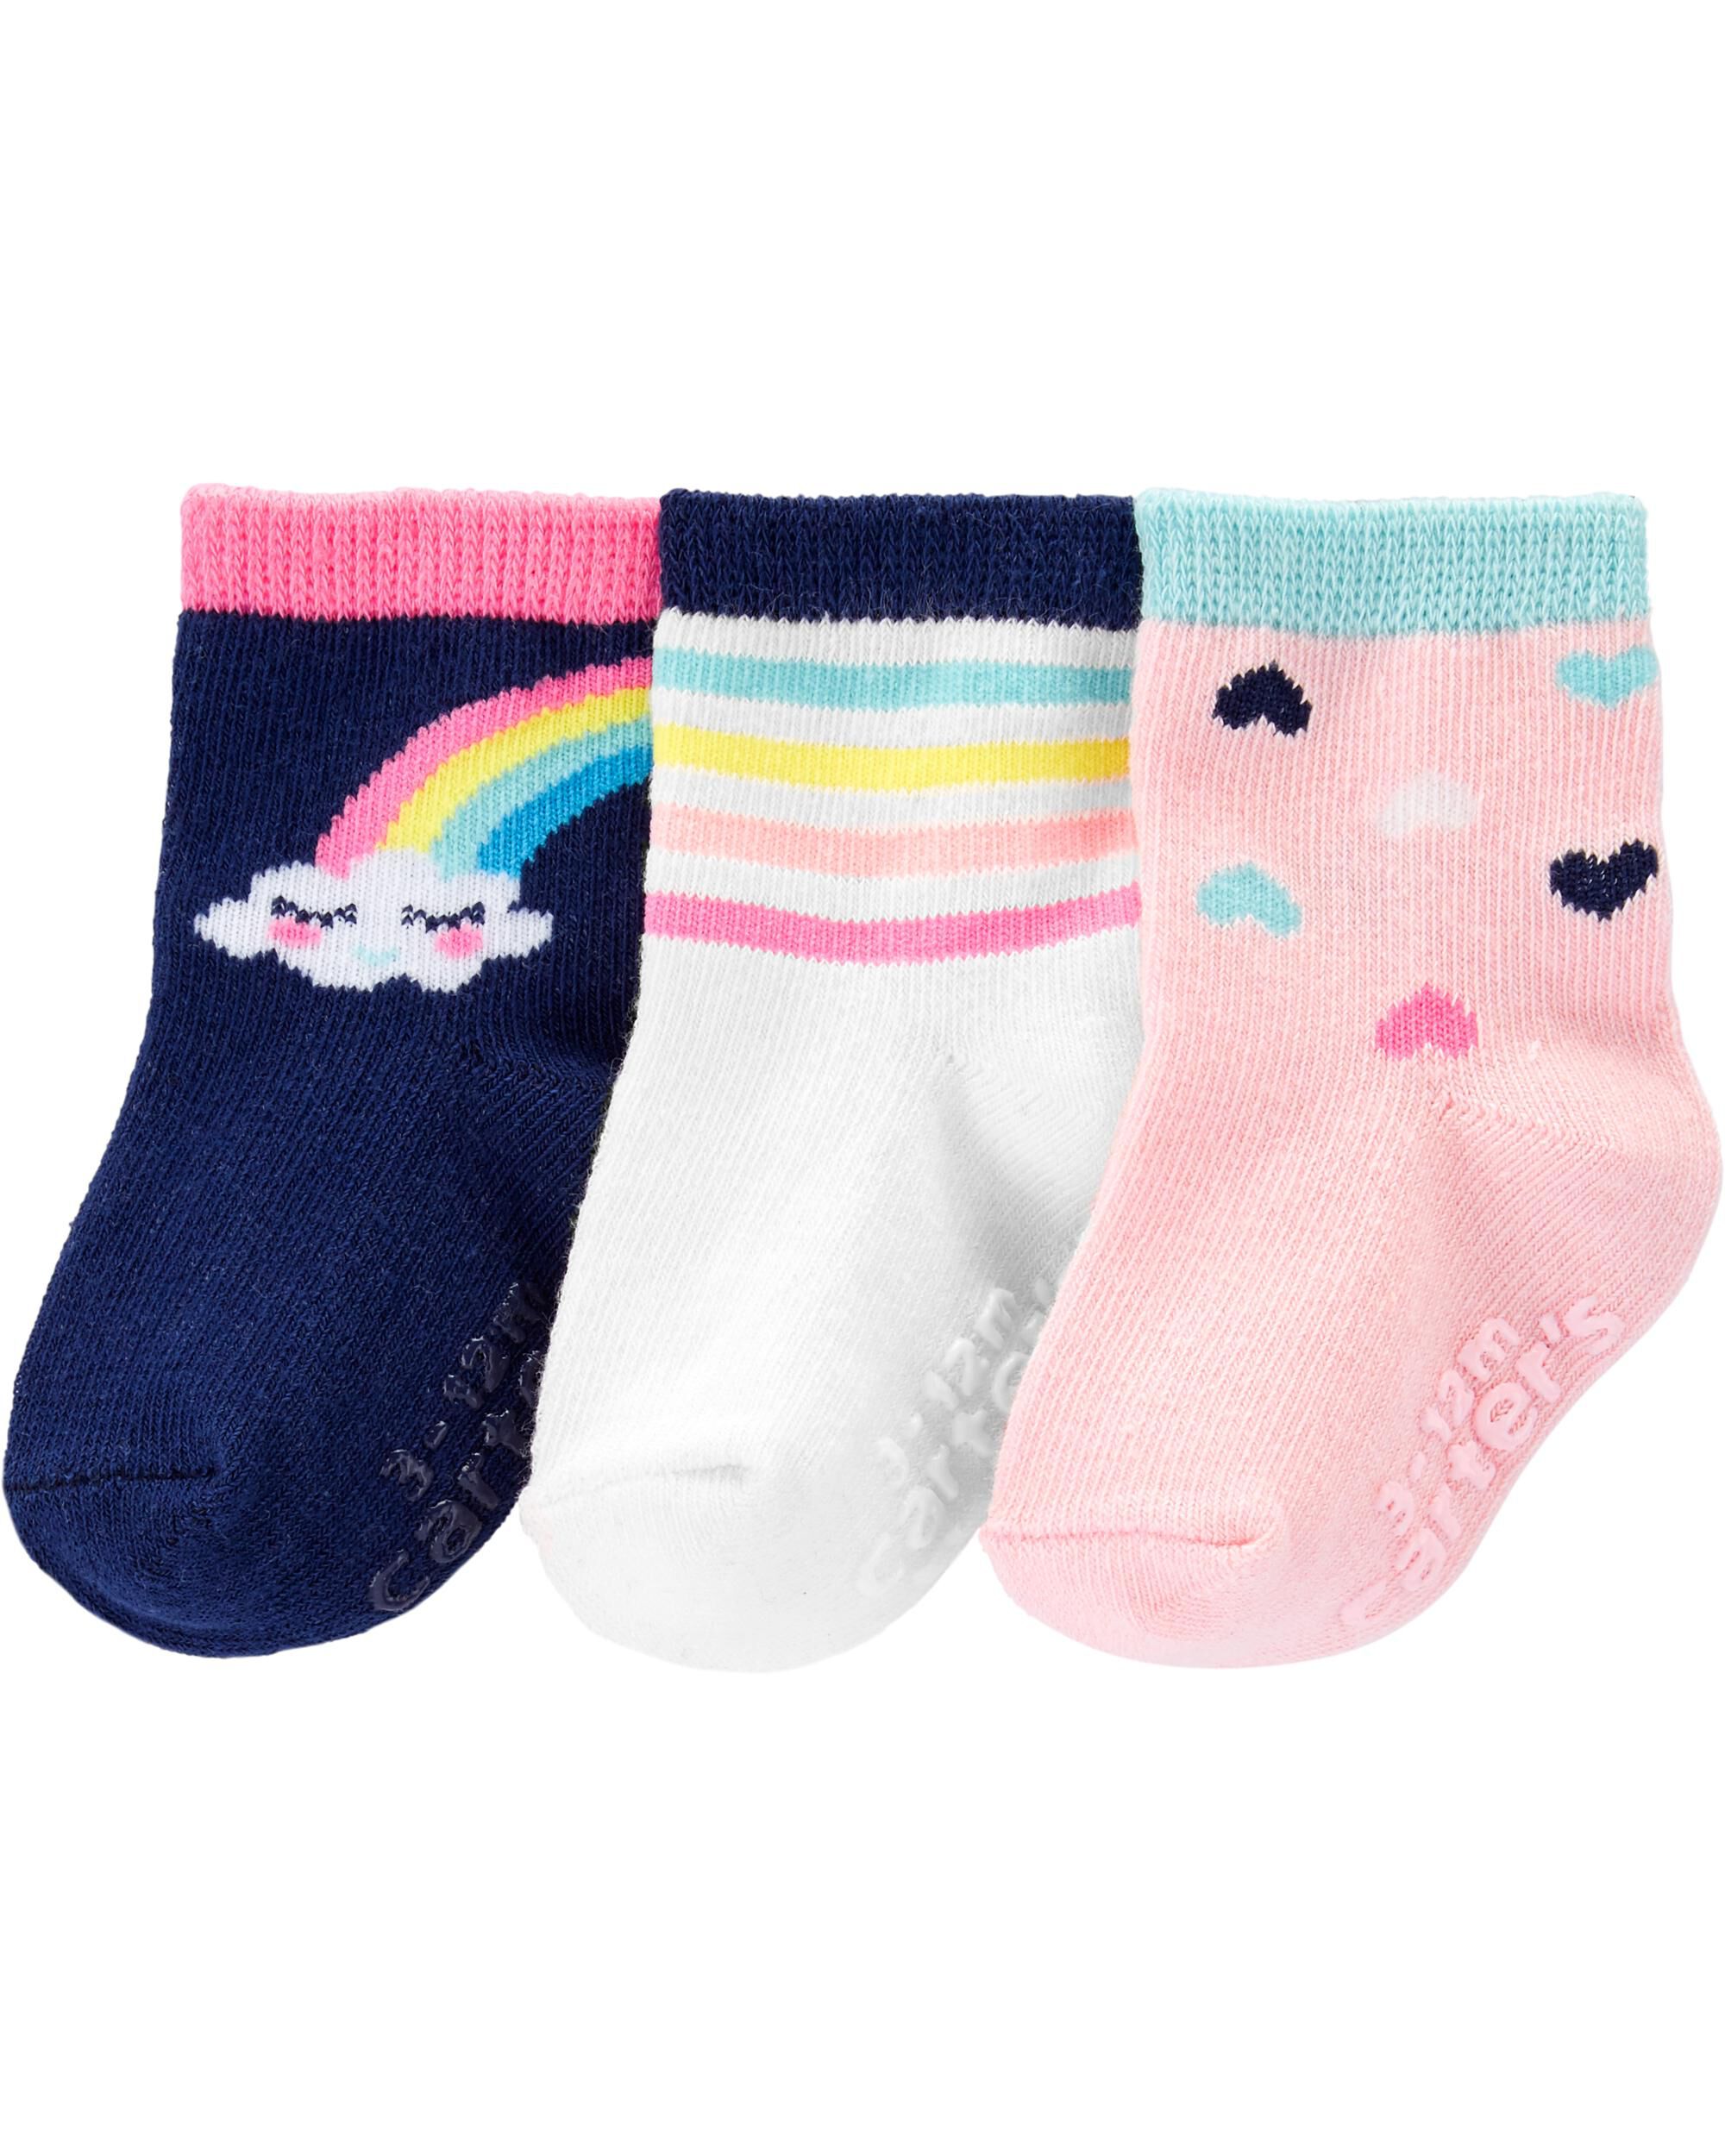 carters infant socks